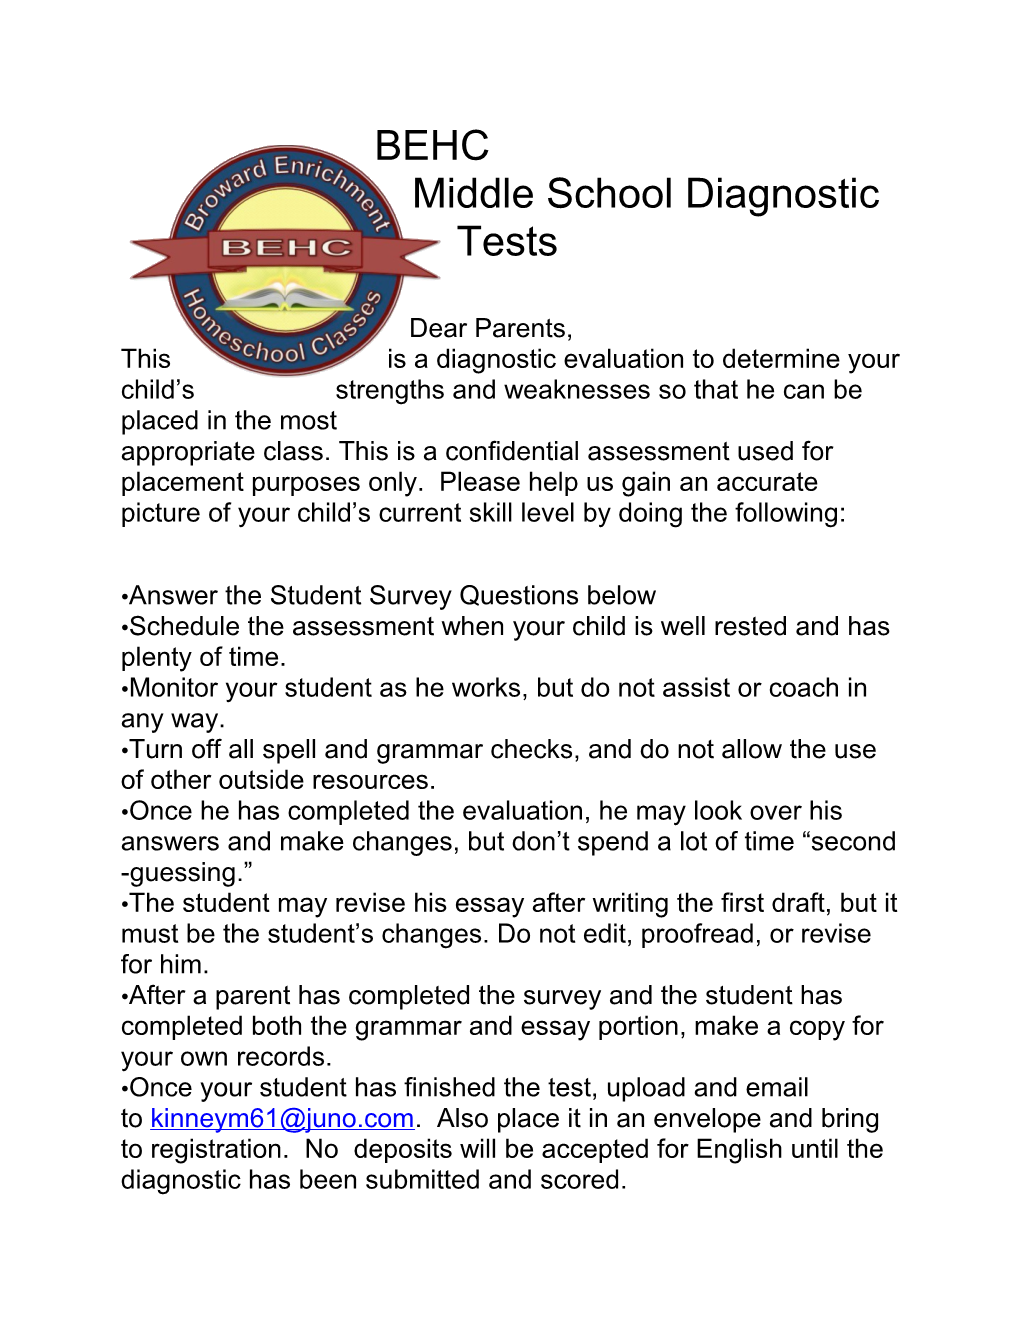 Middle School Diagnostic Tests